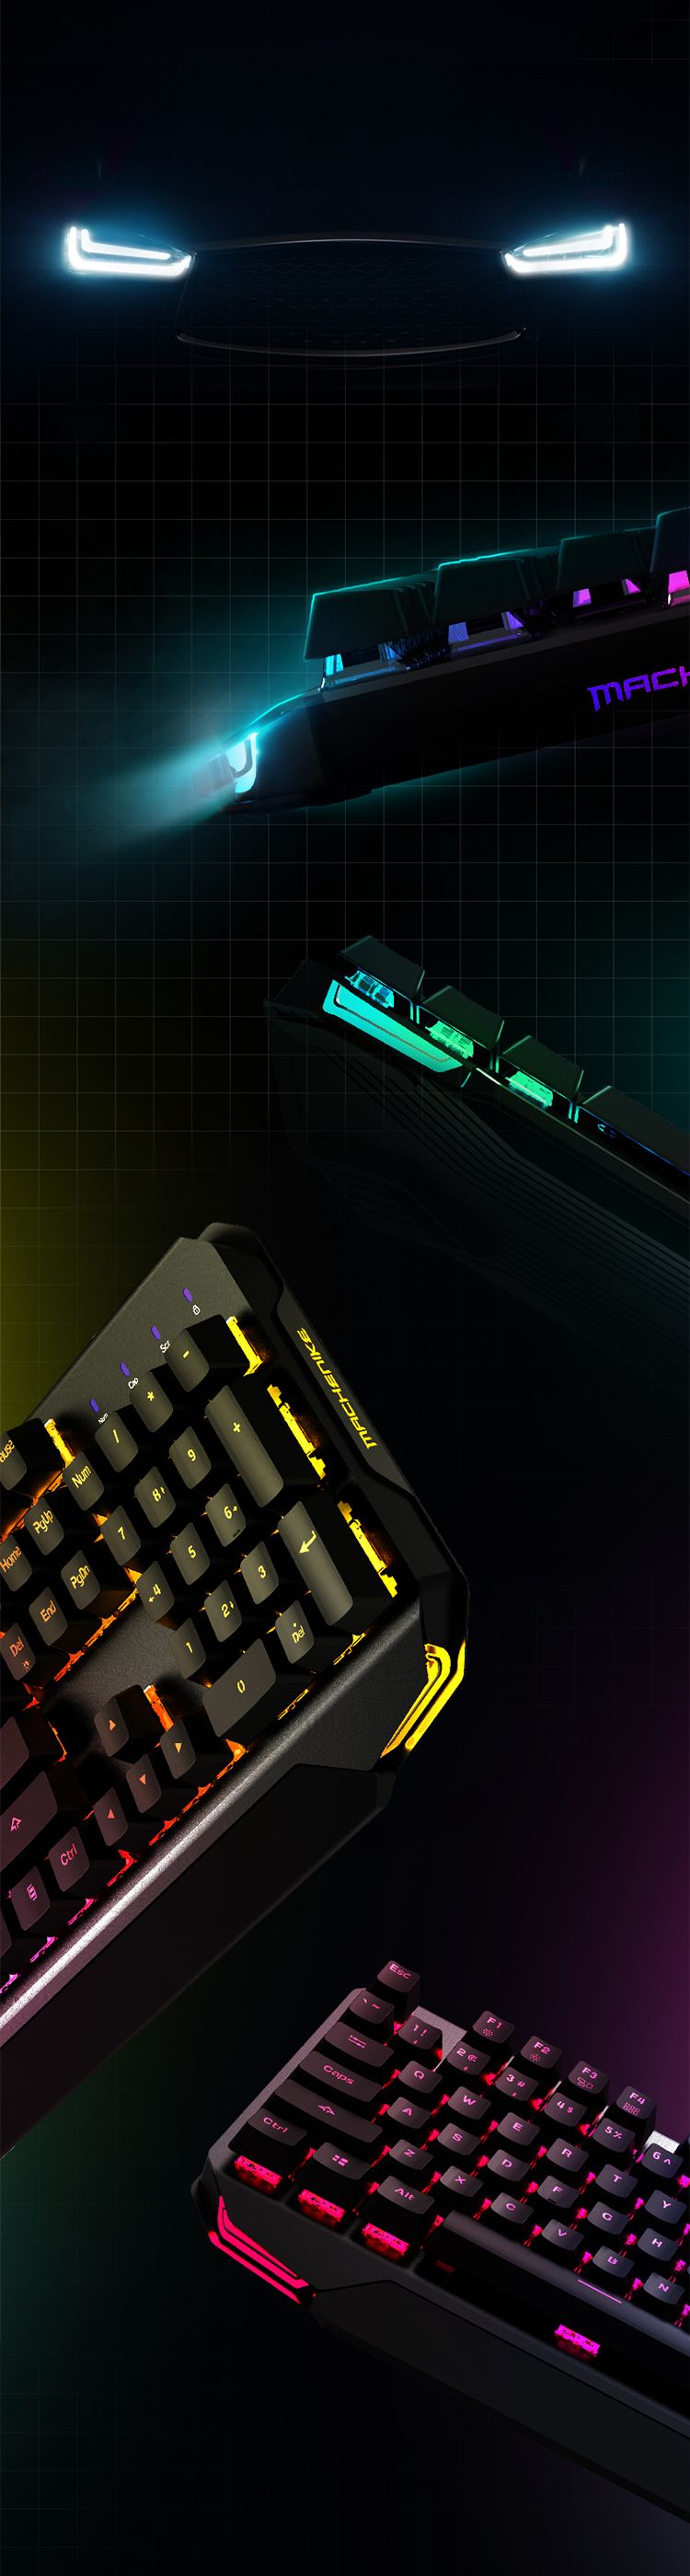 Machenike-K7-WiredWireless-bluetooth-Dual-Modes-87-Keys-Mechanical-Gaming-Keyboard-with-BlueBlack-Sw-1614719